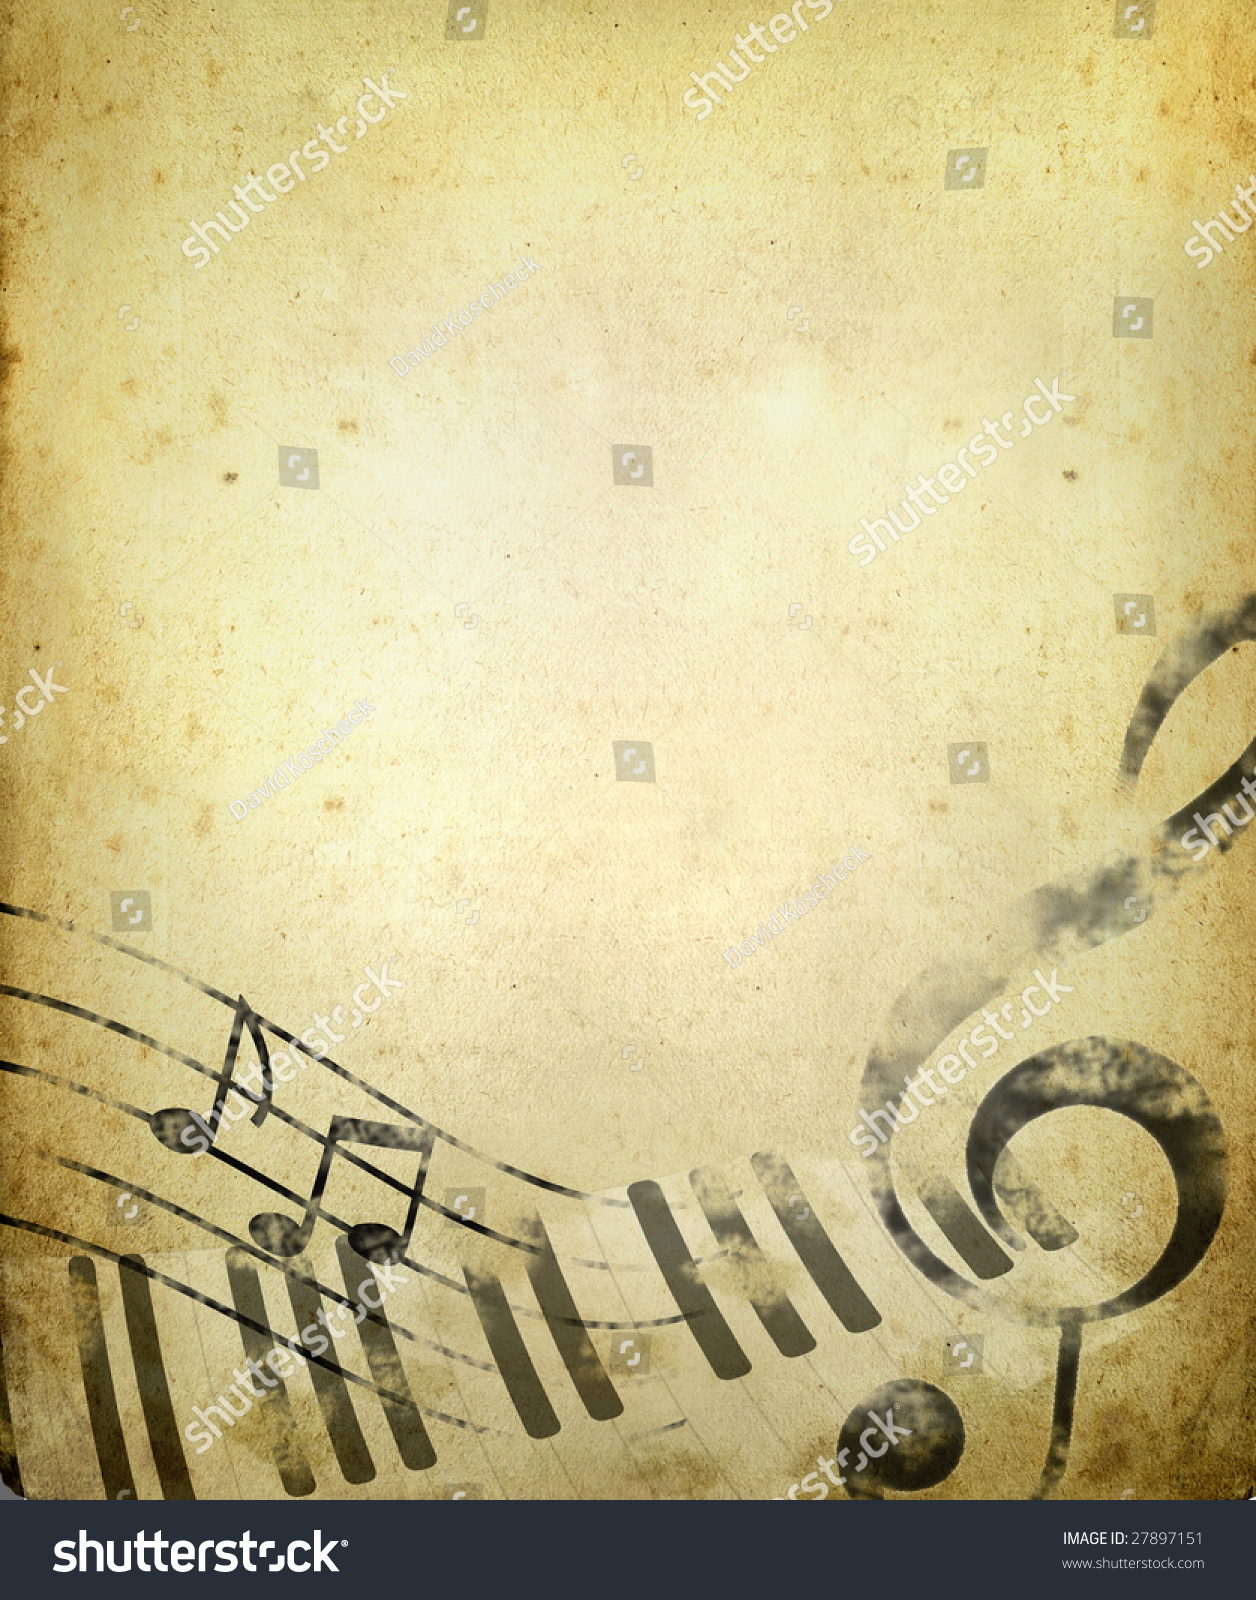 Vintage Music Background Stock Photo Shutterstock